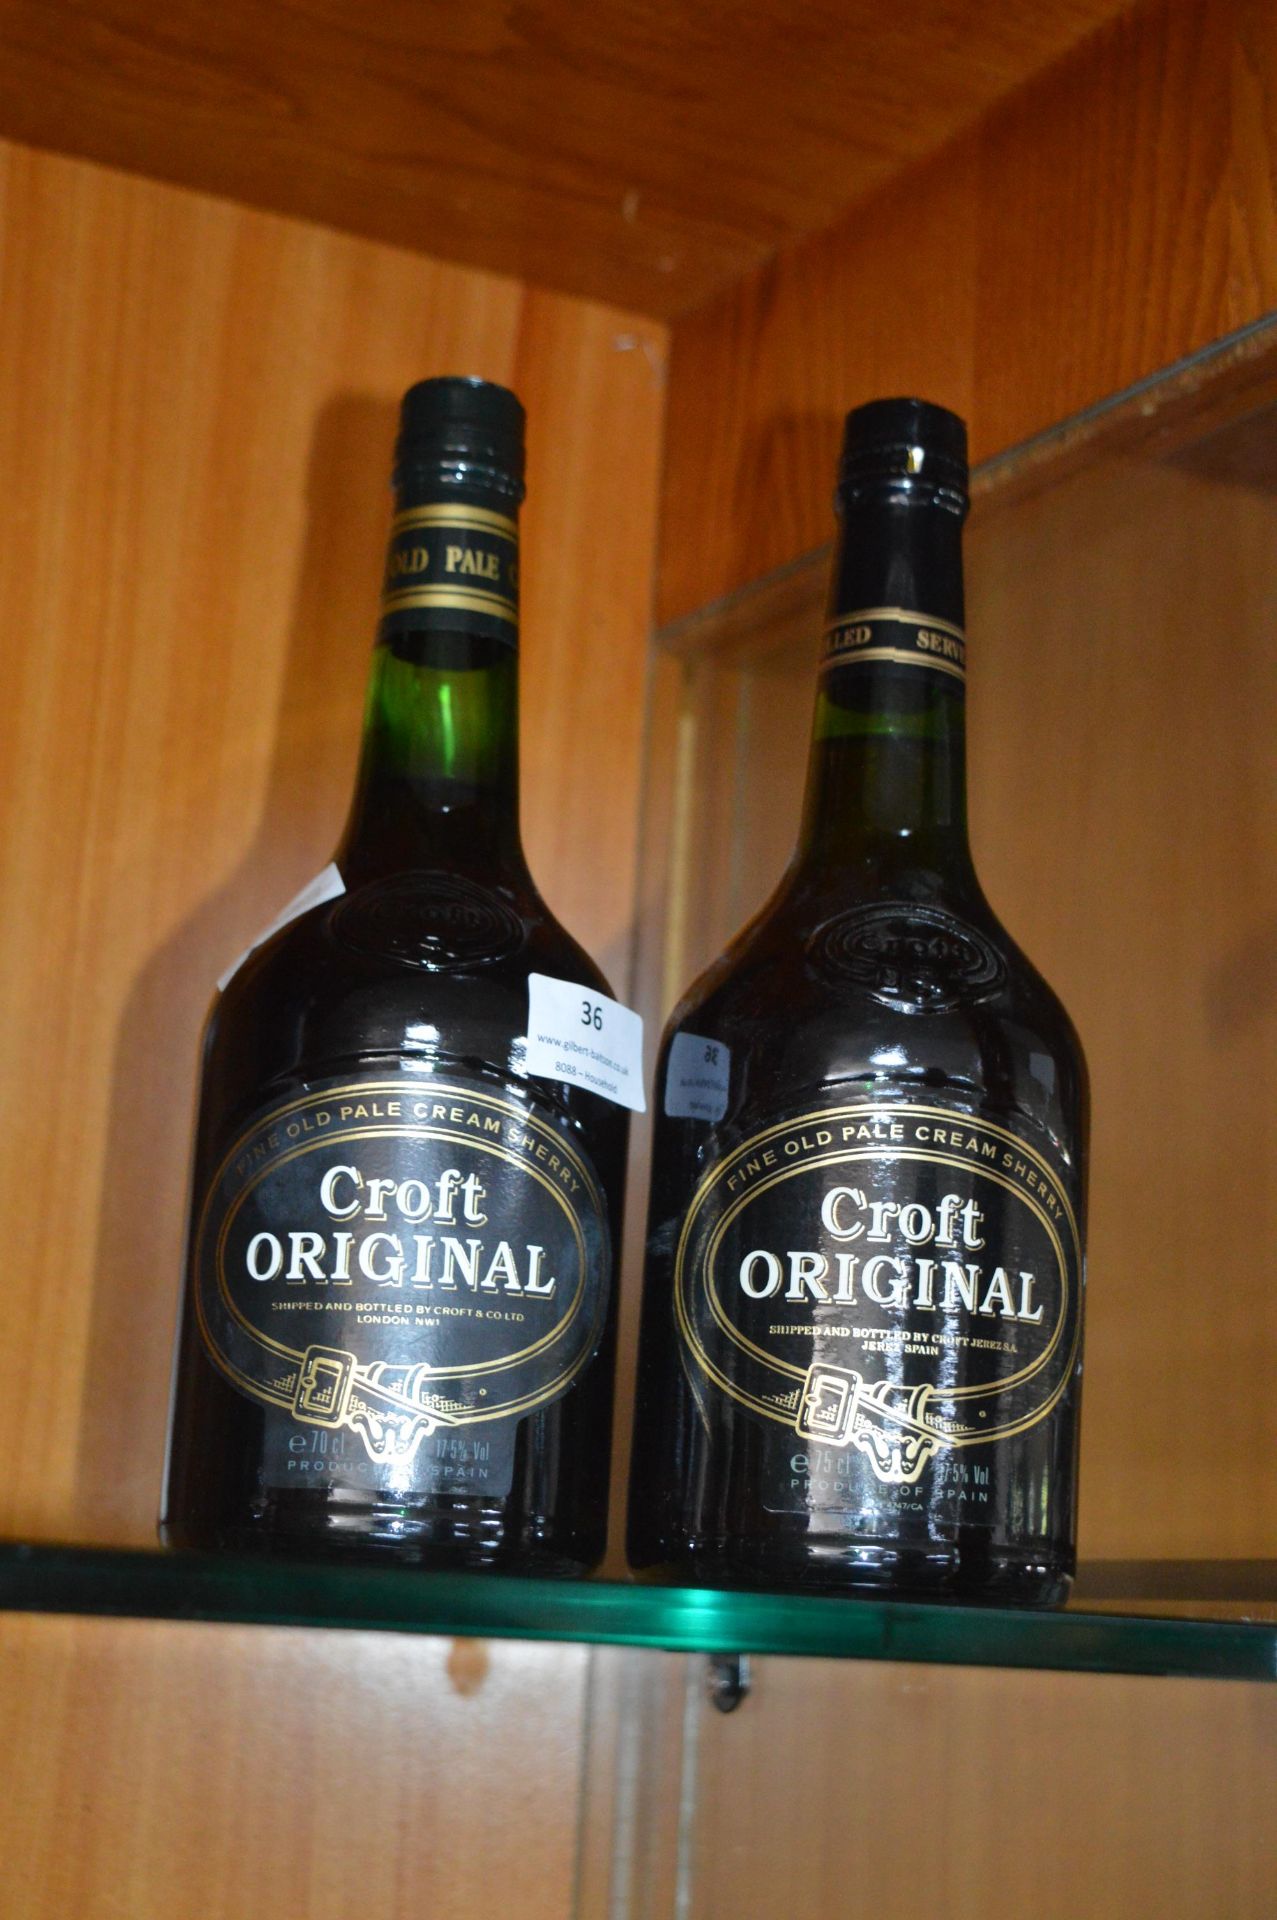 Two Bottles of Croft Original Pale Cream Sherry